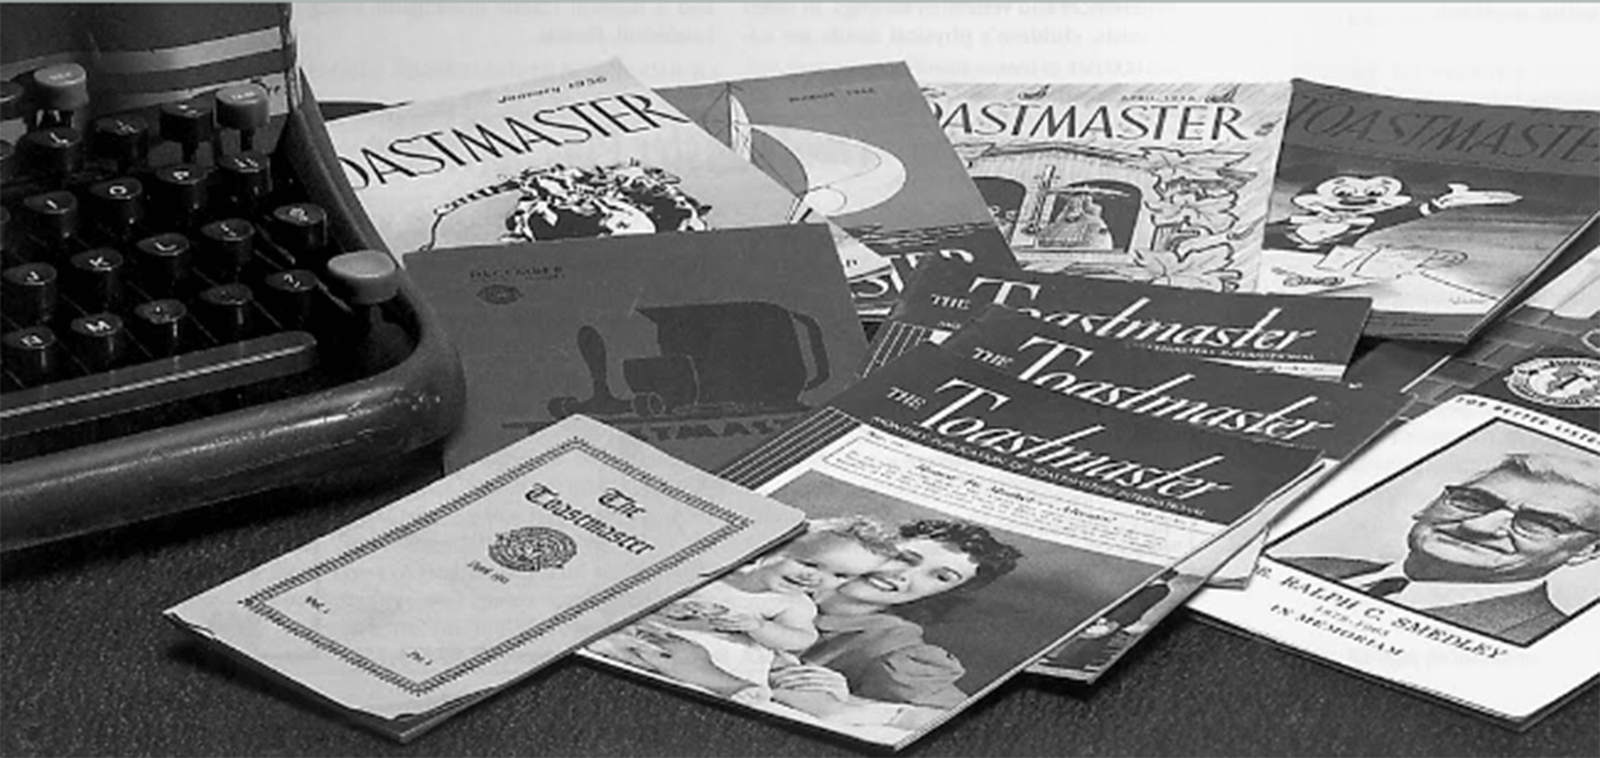 Vintage Toastmaster magazines next to typewriter